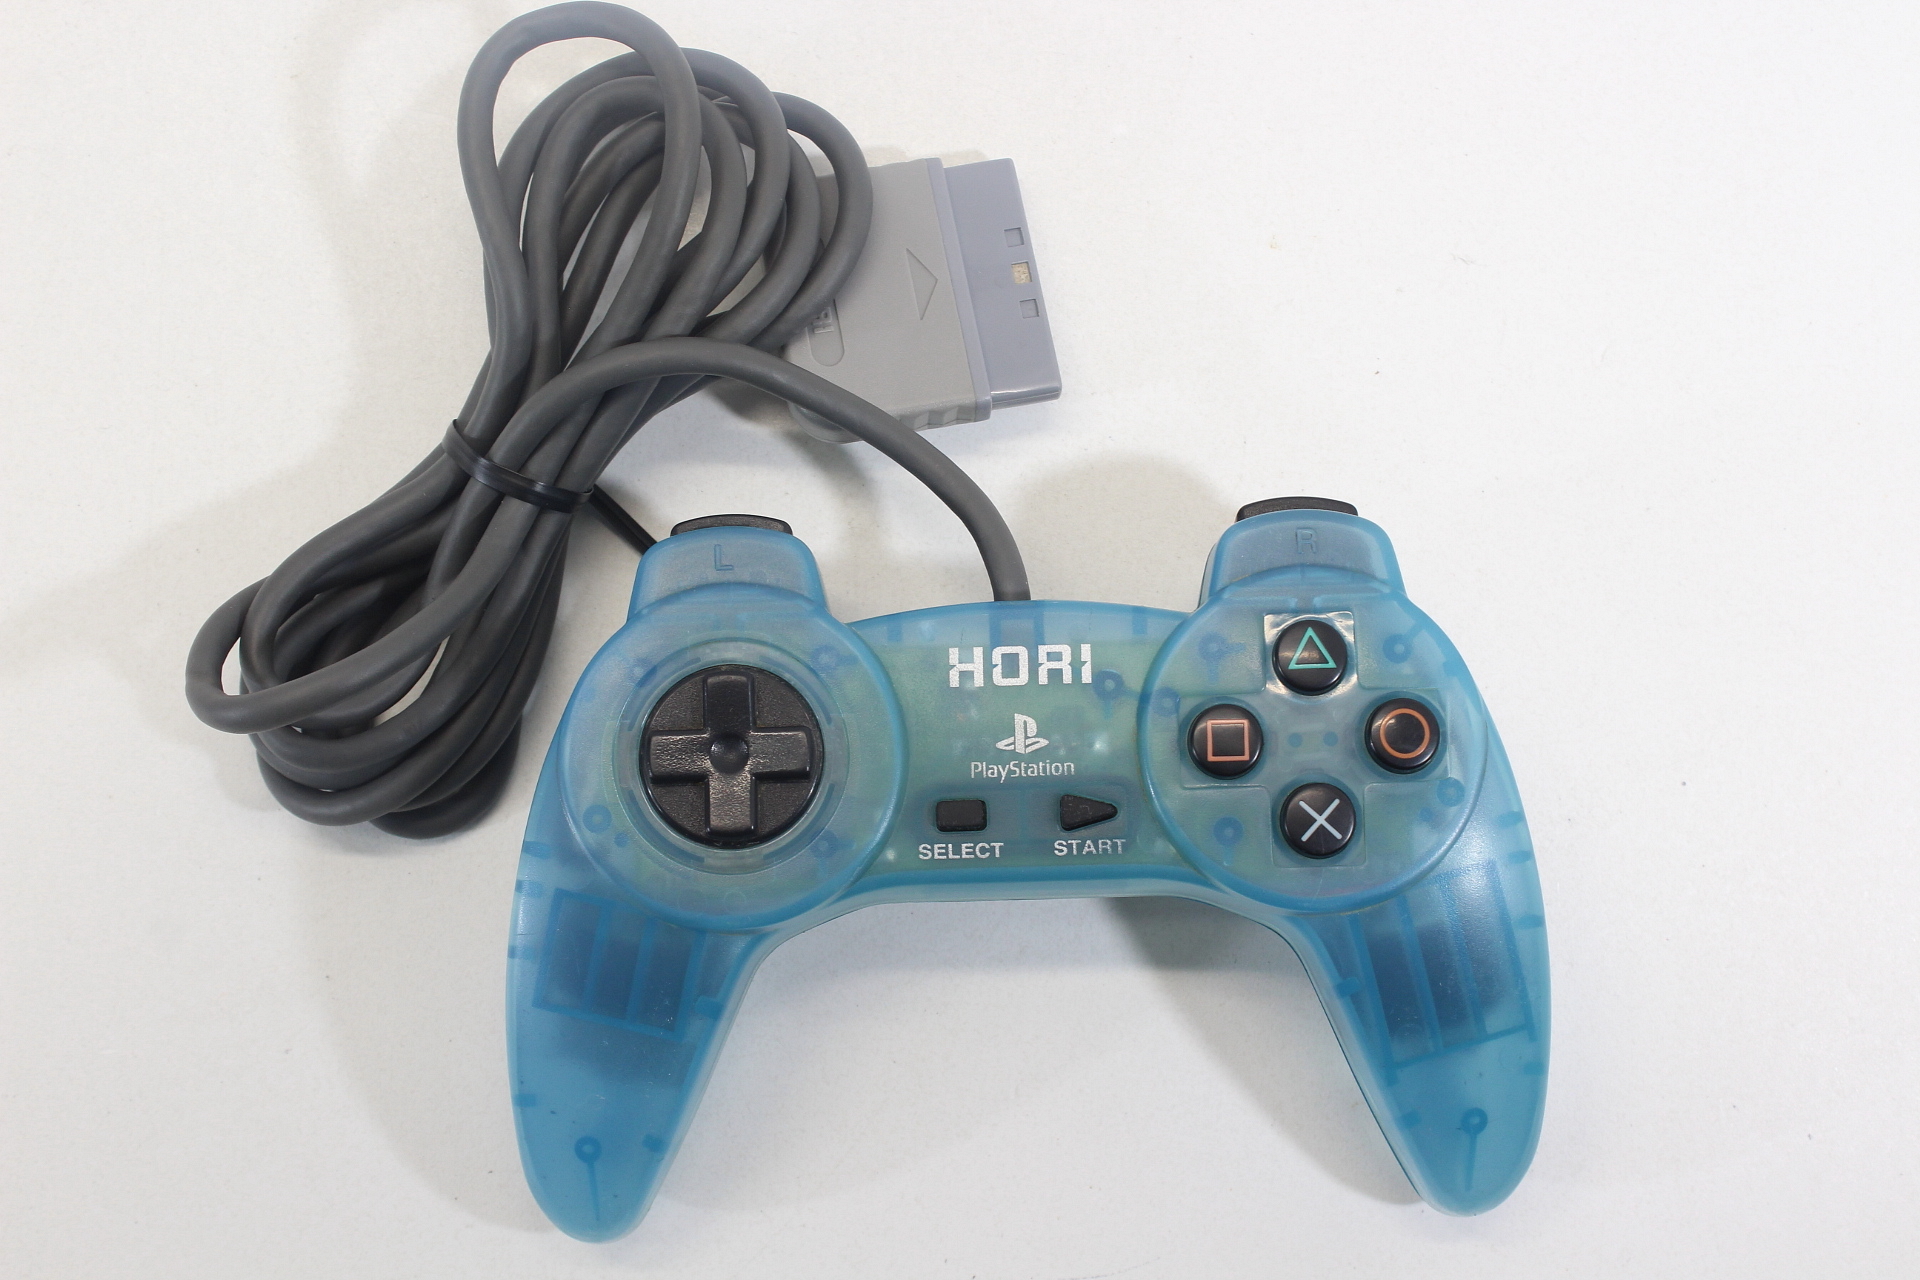 Hori Digital Sindou Pad HPS-52 Clear Blue Controller Playstation & 2 PS1 PS2 (B) – Retro Games Japan